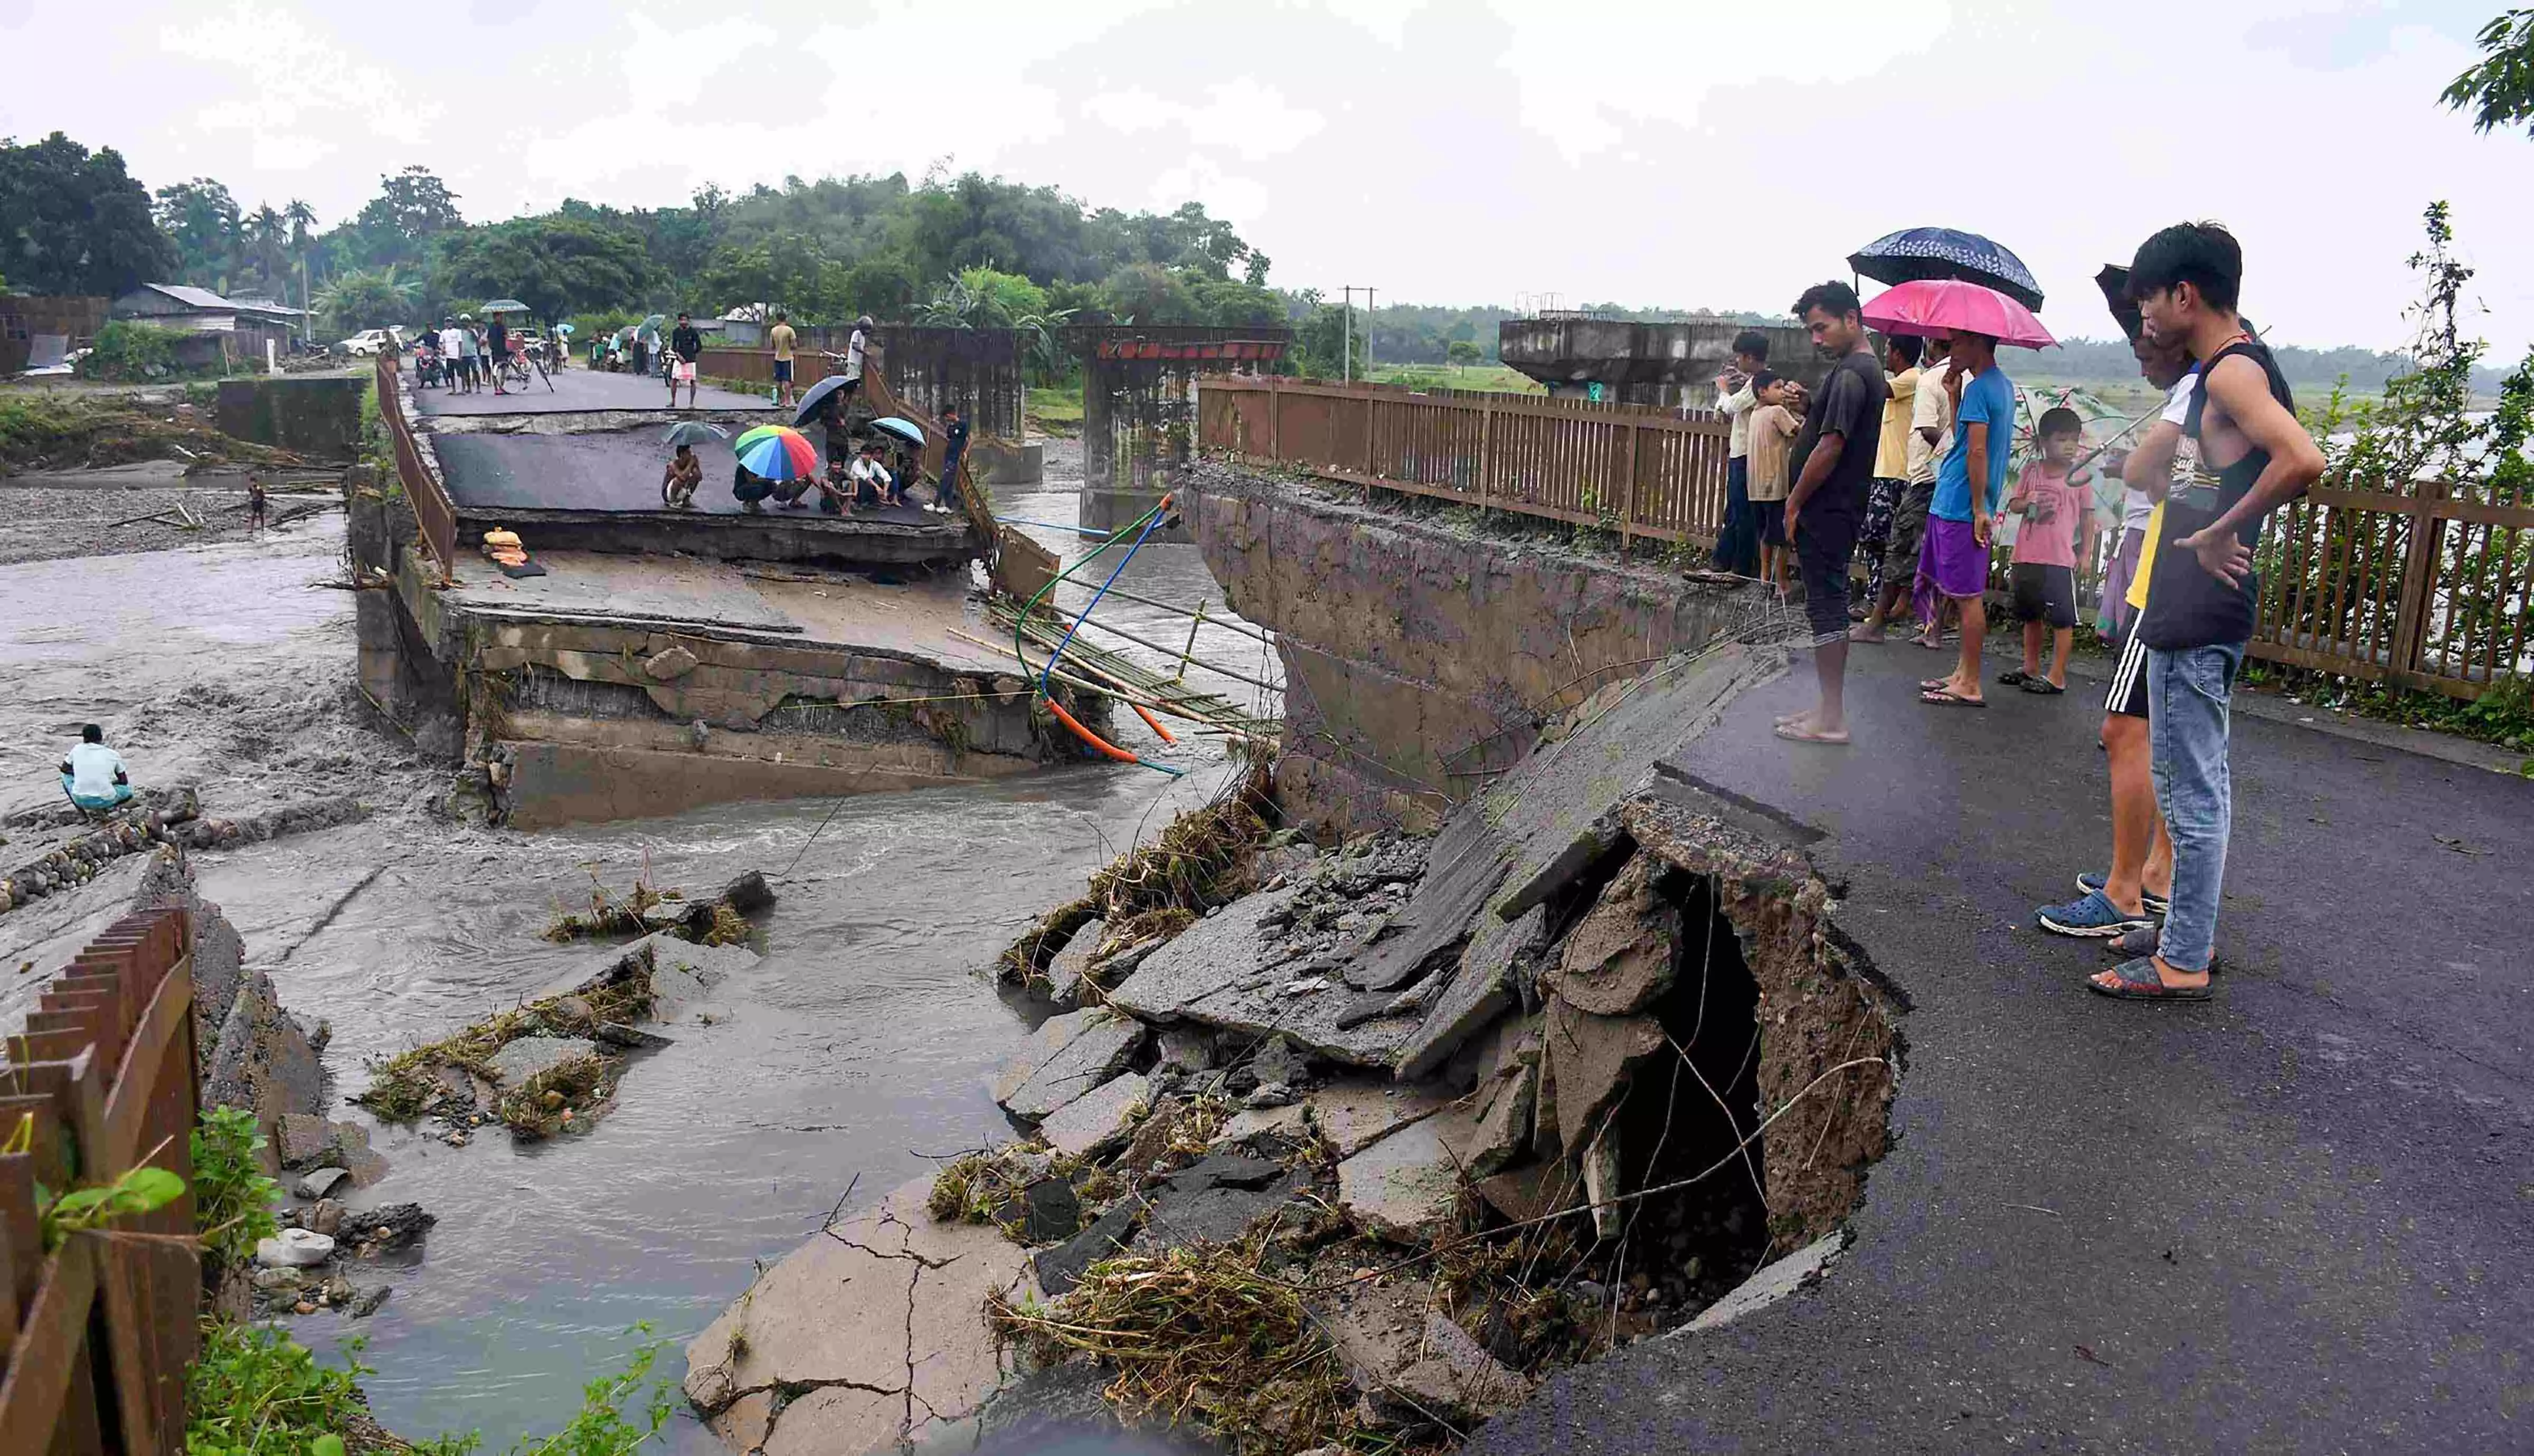 Assam floods: Shah speaks to Chief Minister Sarma; assures help